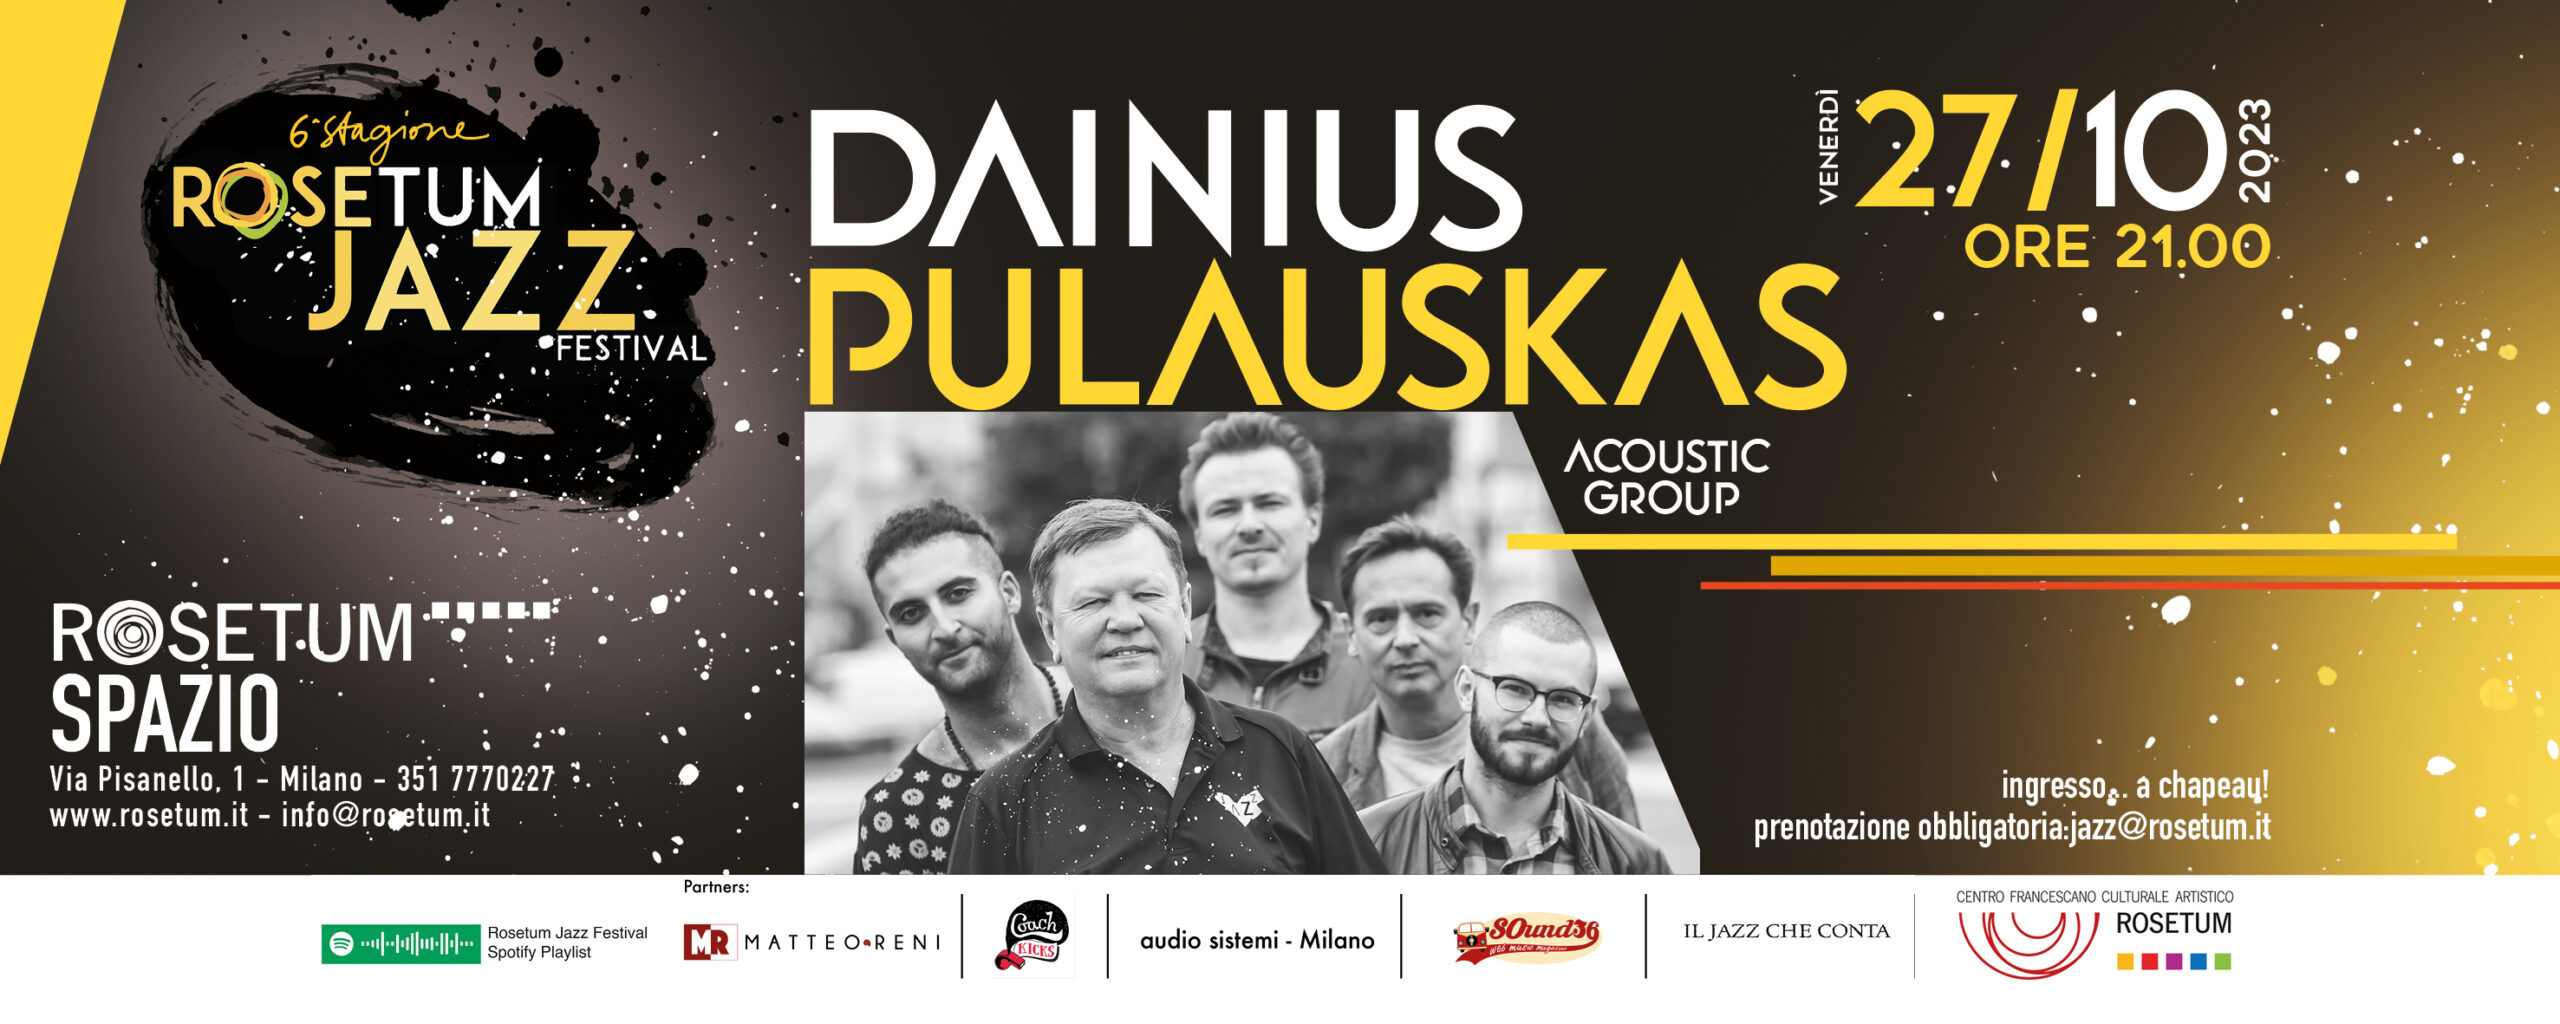 Dainius Pulauskas Acoustic Group